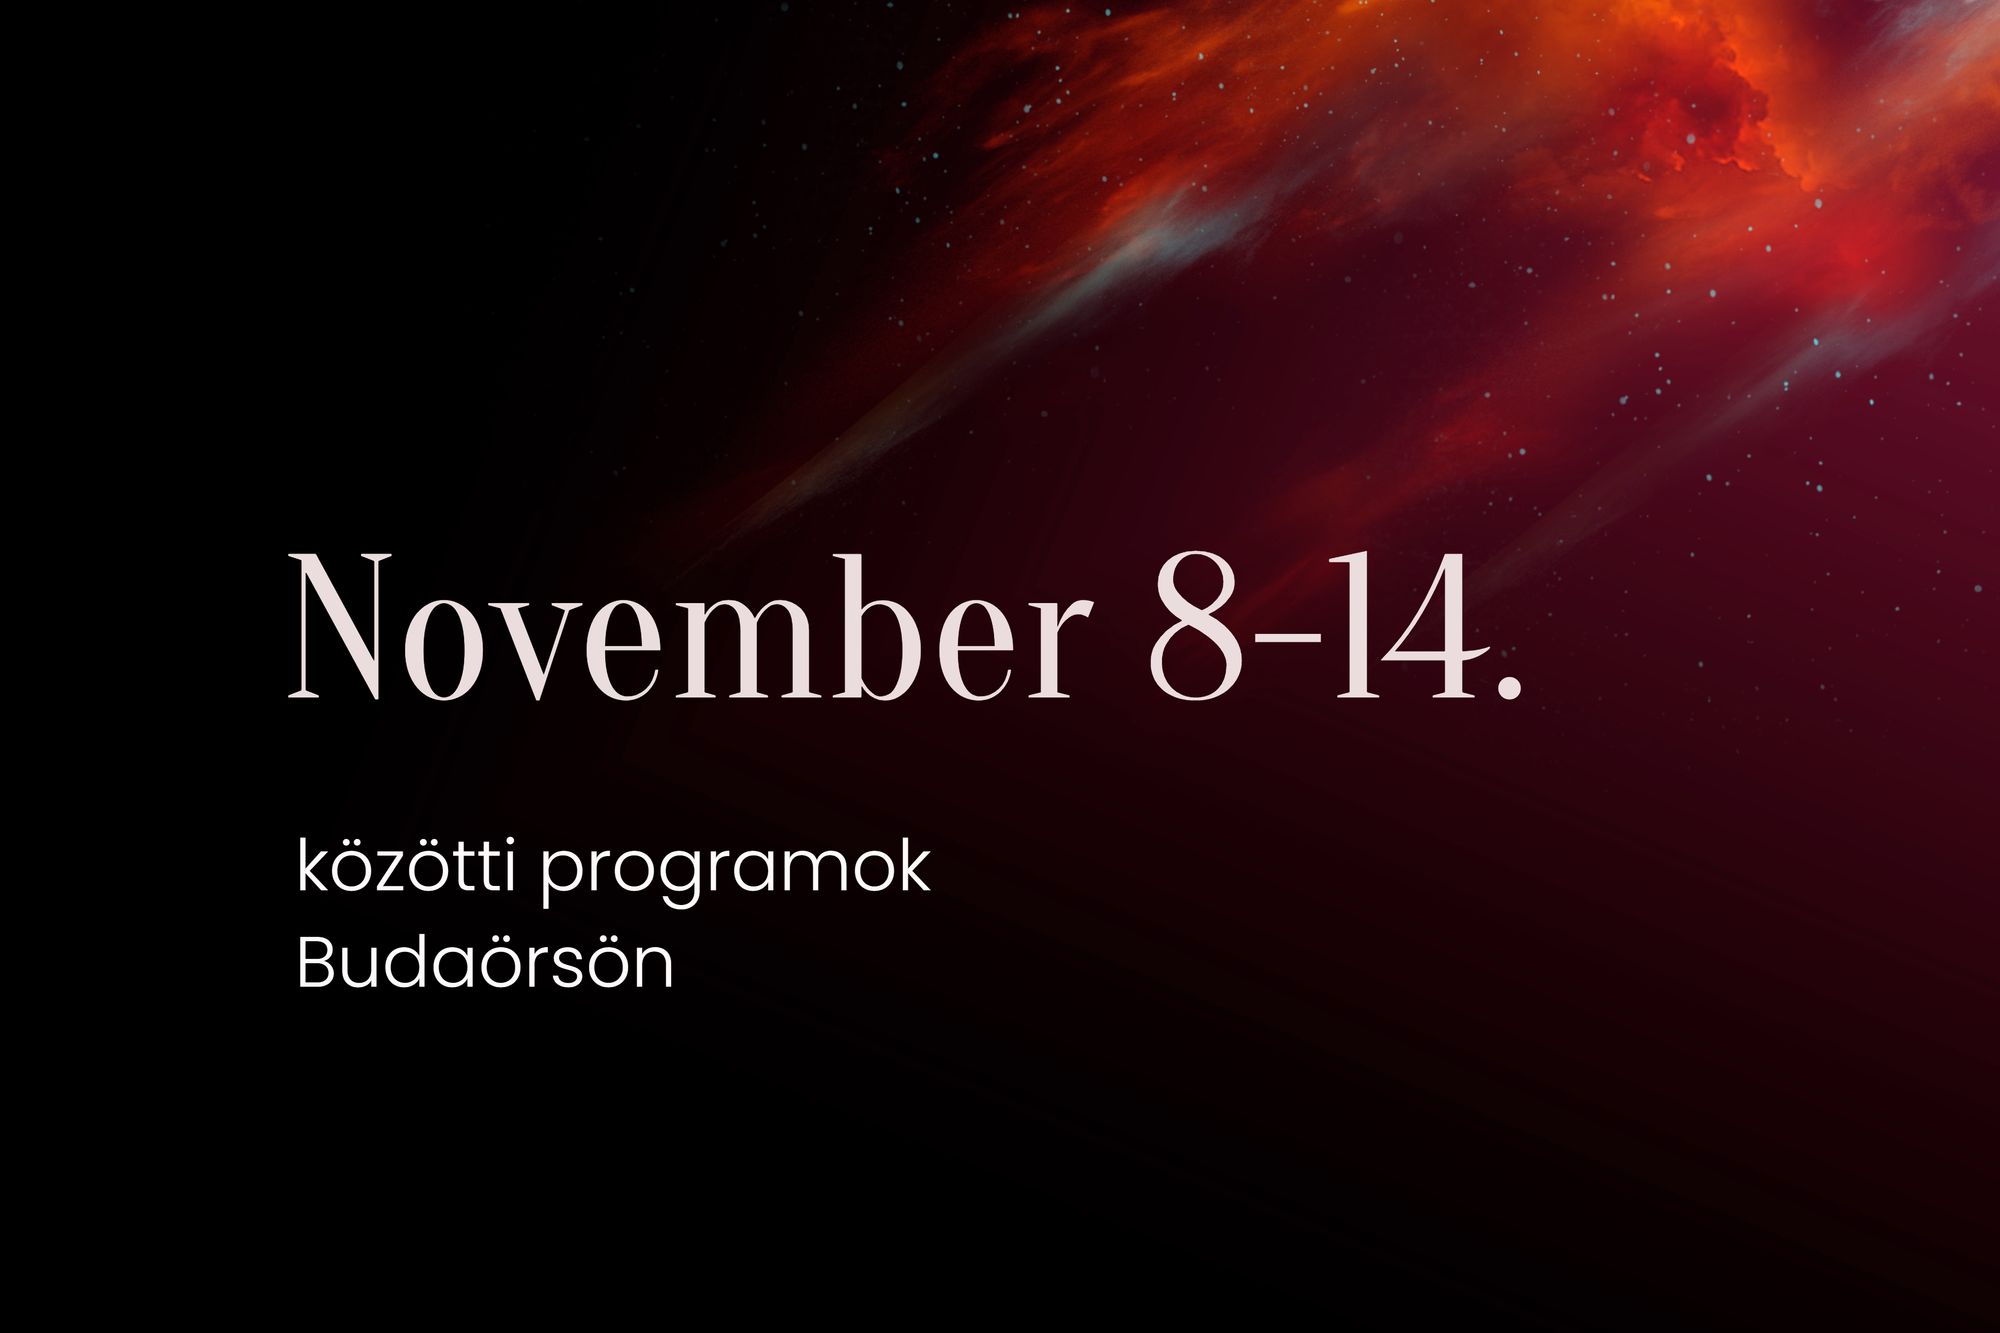 November 8-14. közötti programok Budaörsön